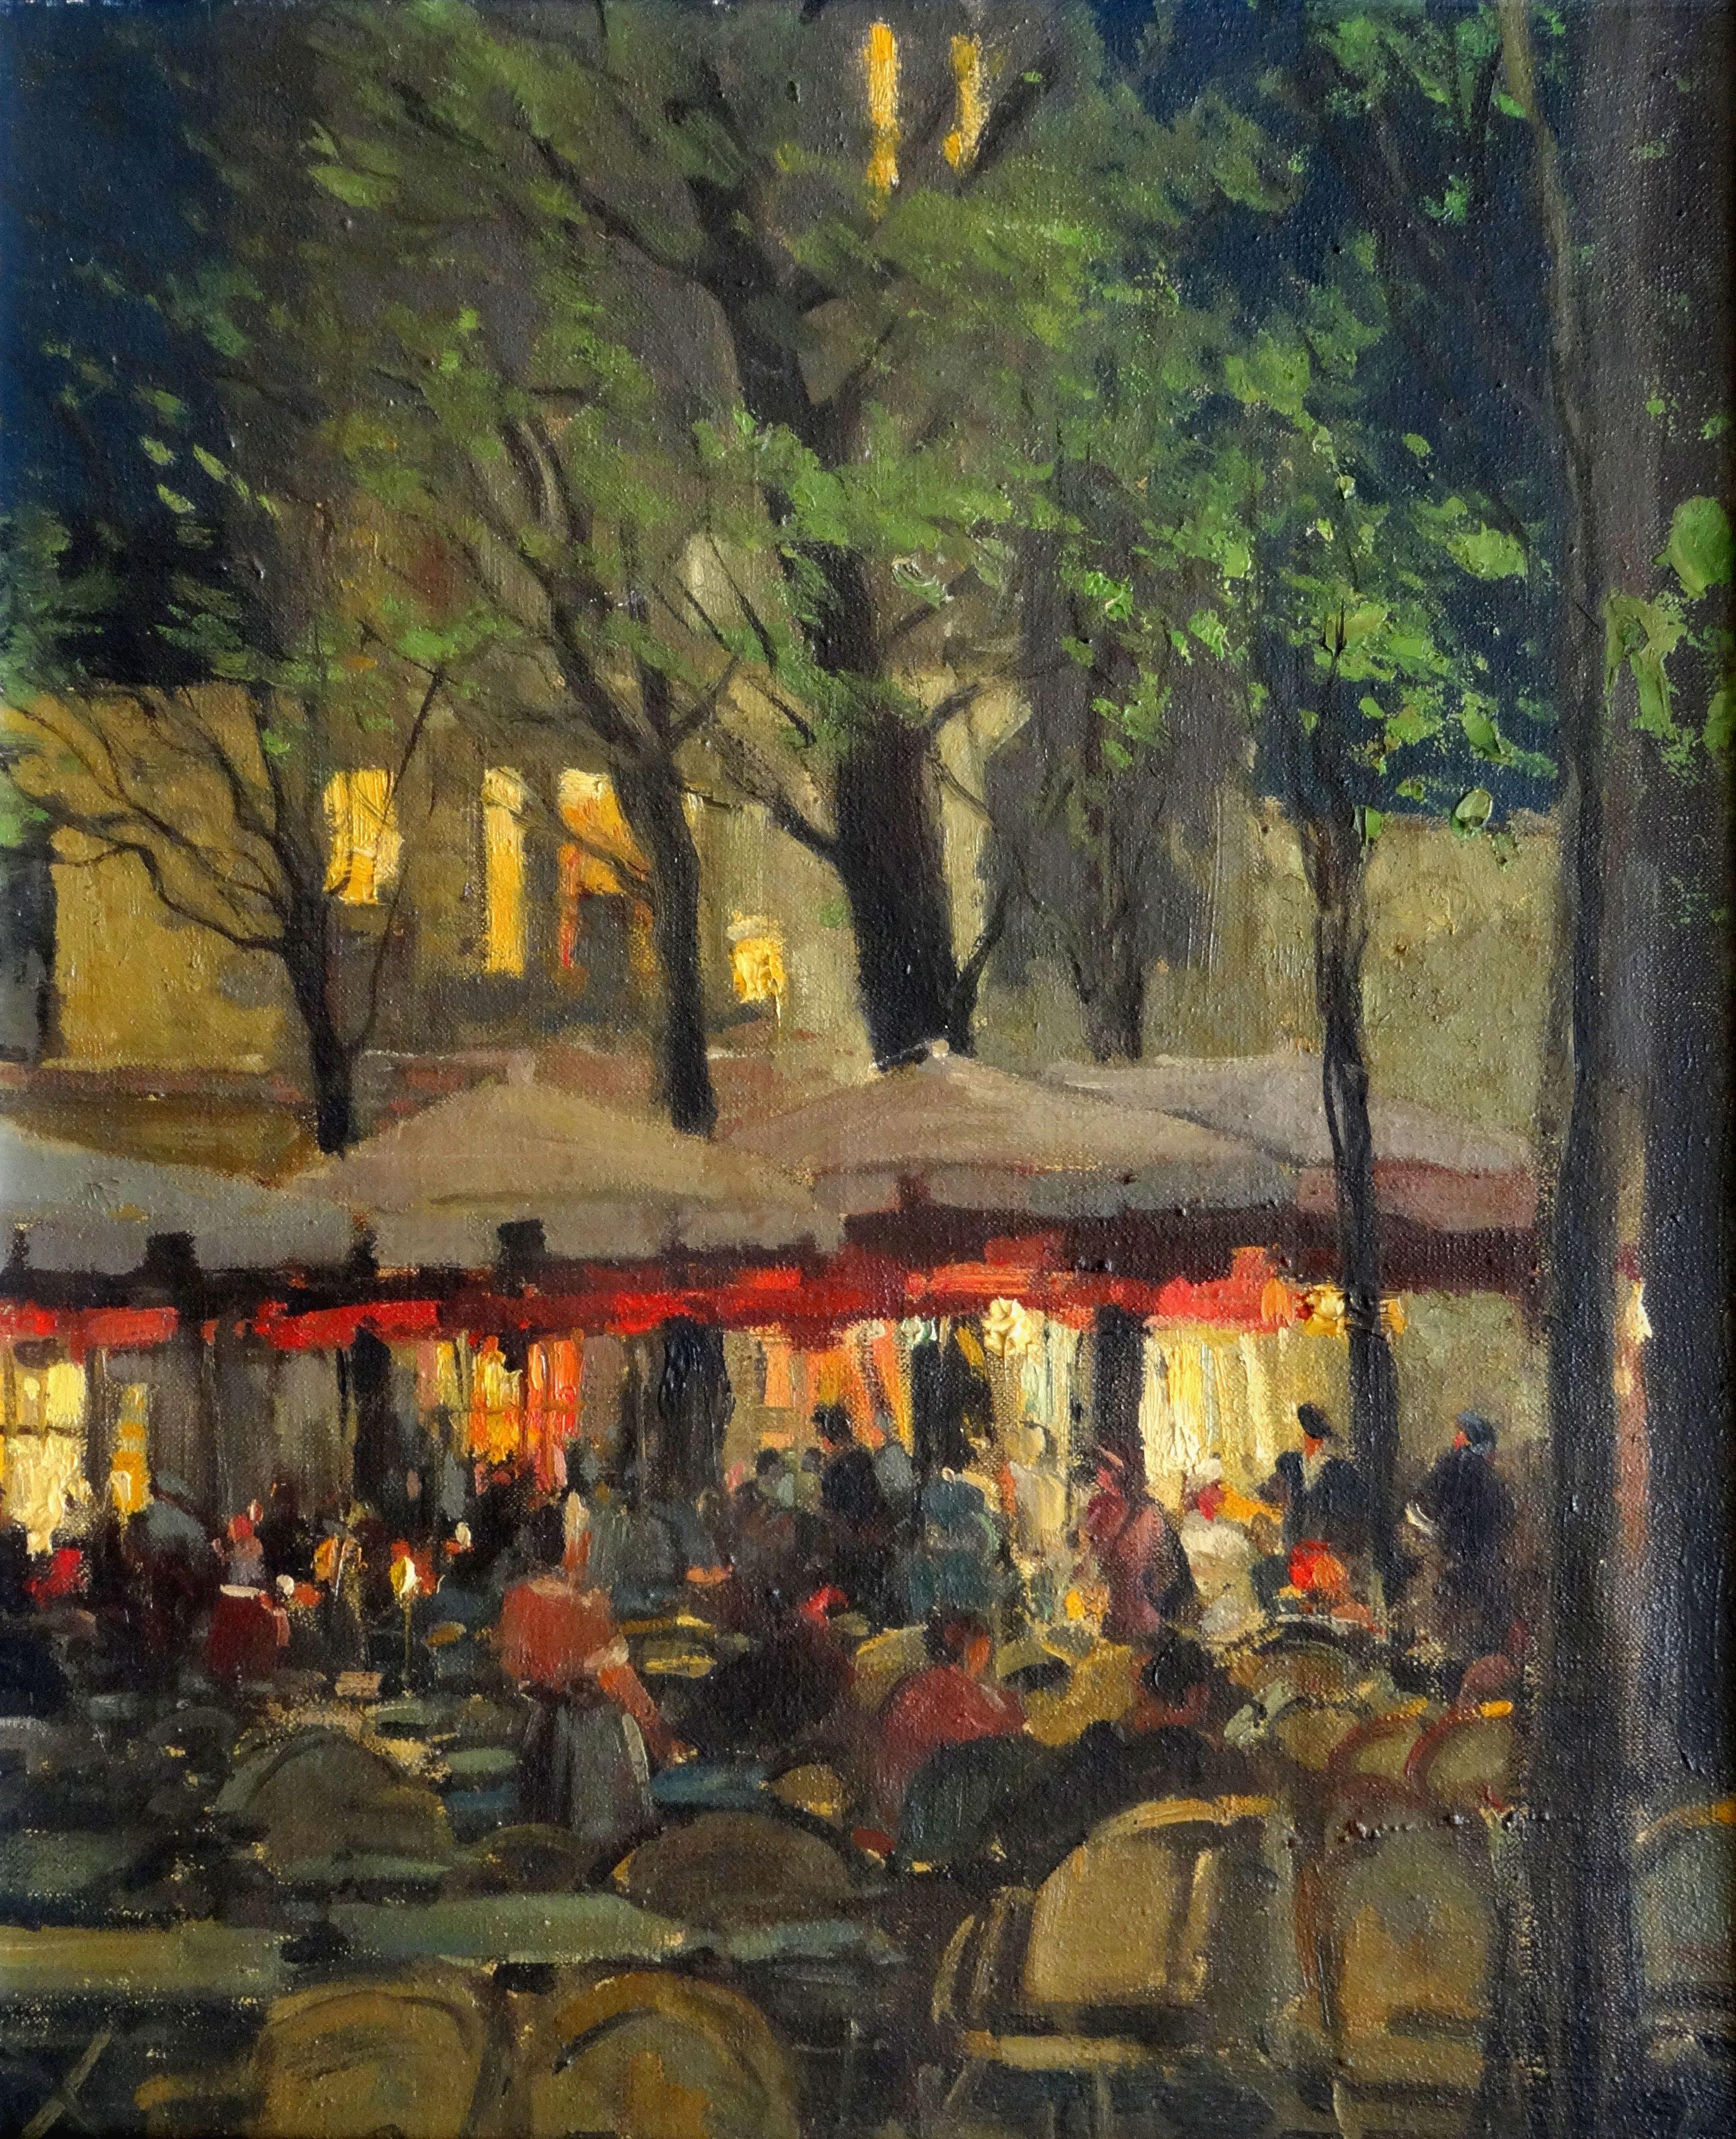 Serge Kislakoff Figurative Painting - Restaurant terrace at evening in Montmartre, Paris. Oil on canvas, 46x38 cm